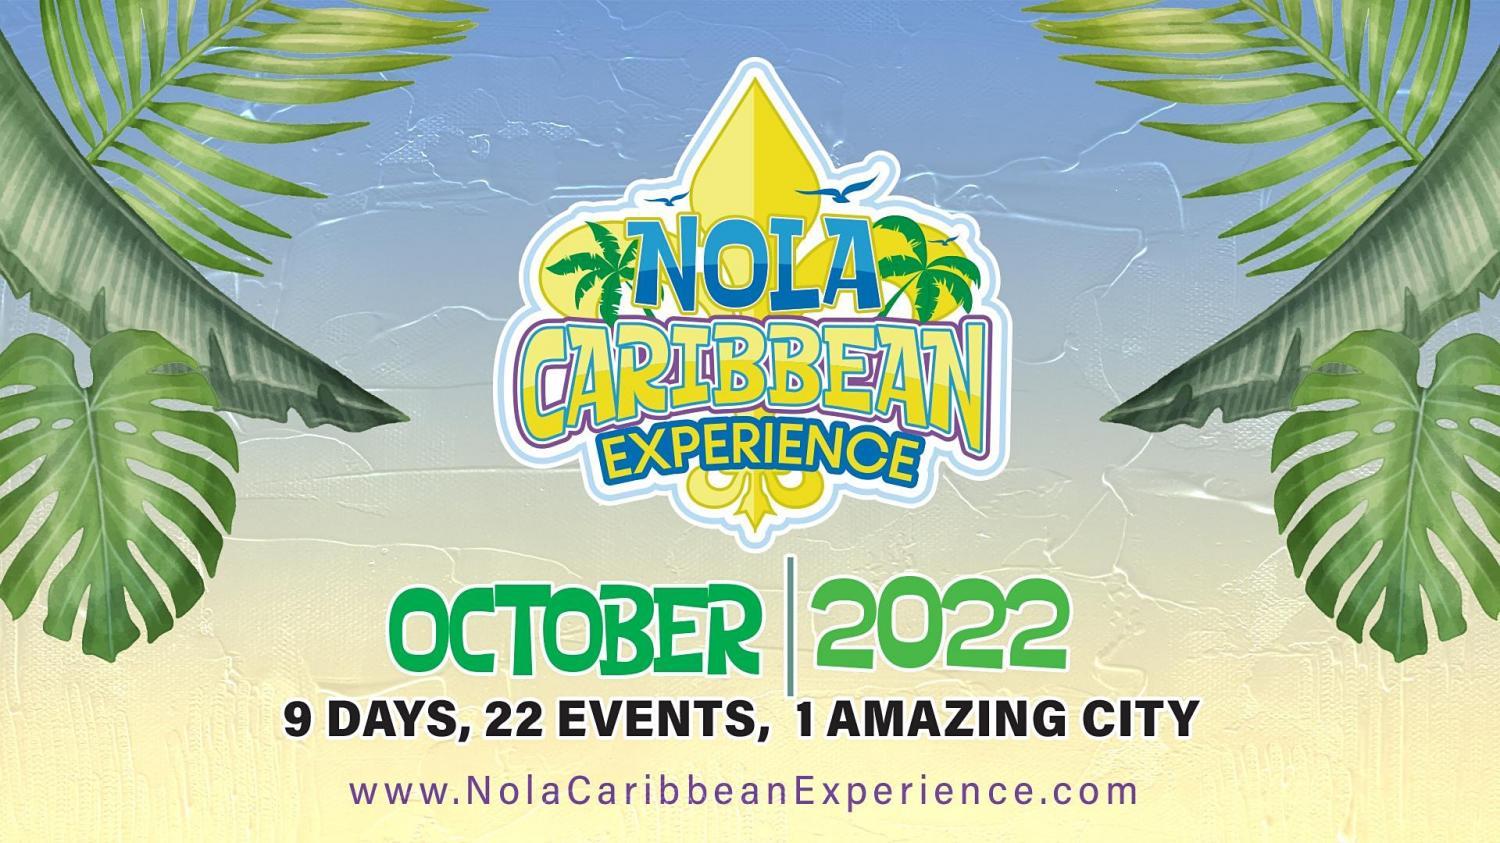 NOLA Caribbean Experience
Thu Oct 20, 10:00 PM - Fri Oct 21, 3:00 AM